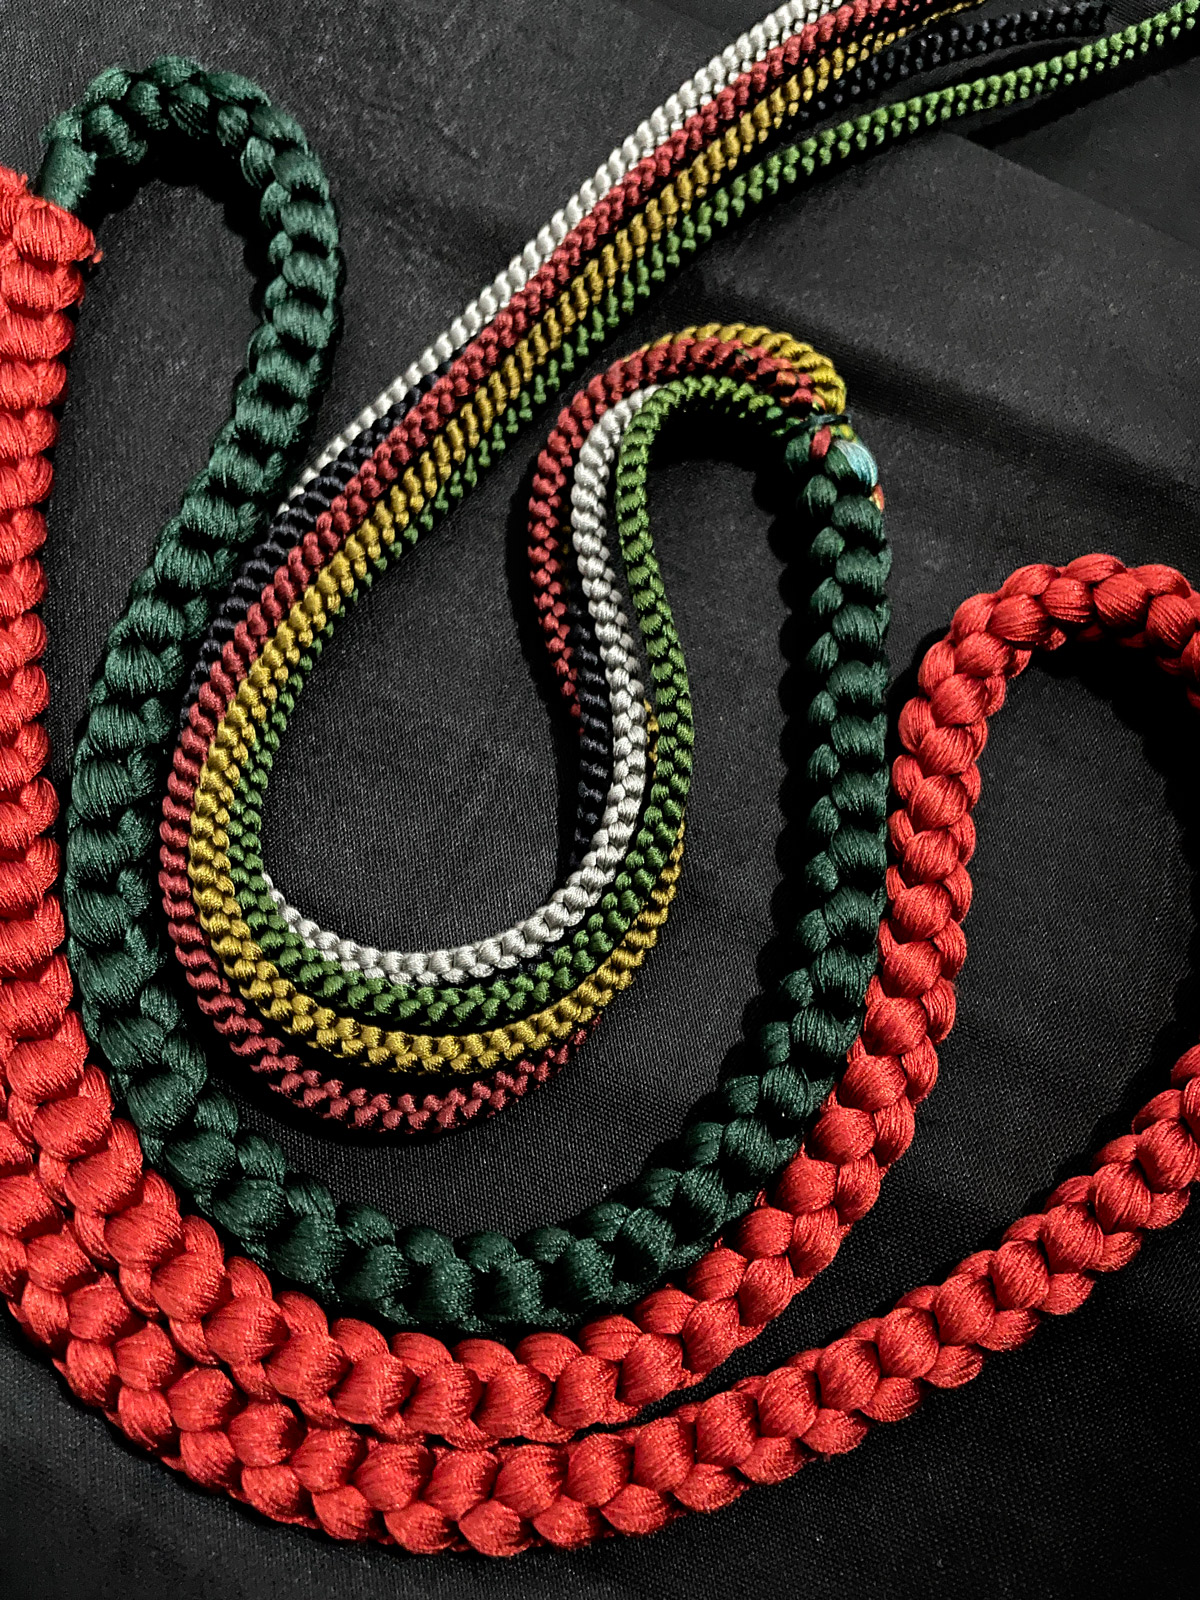 Beautiful multicolored Obijime silk cord